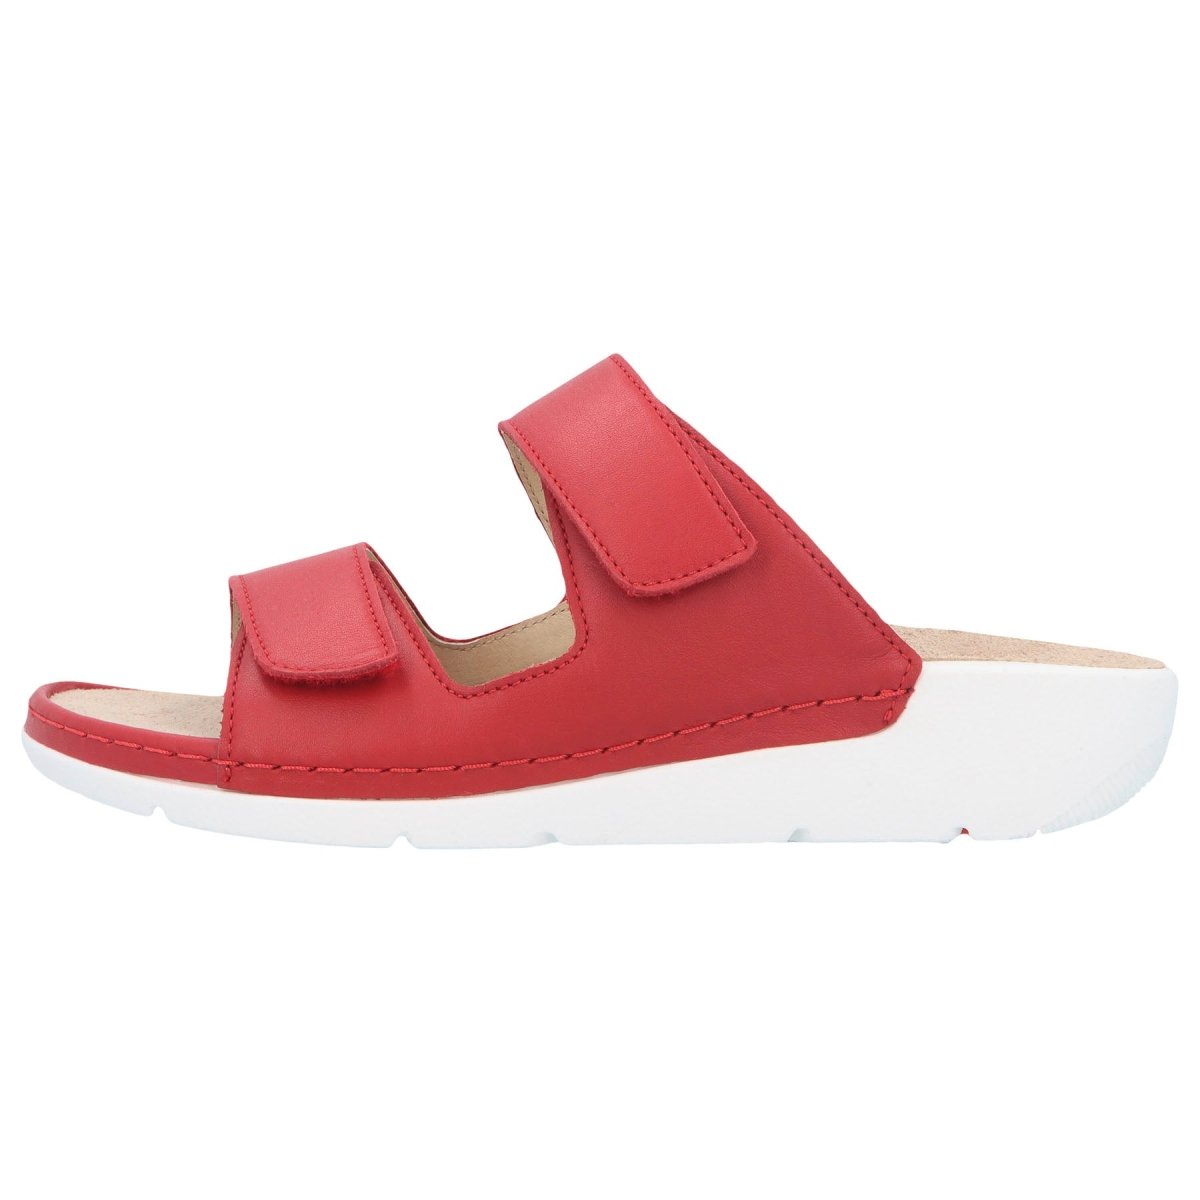 BERKEMANN WINONA WOMEN'S SANDAL IN SIGNAL RED LEATHER - TLW Shoes